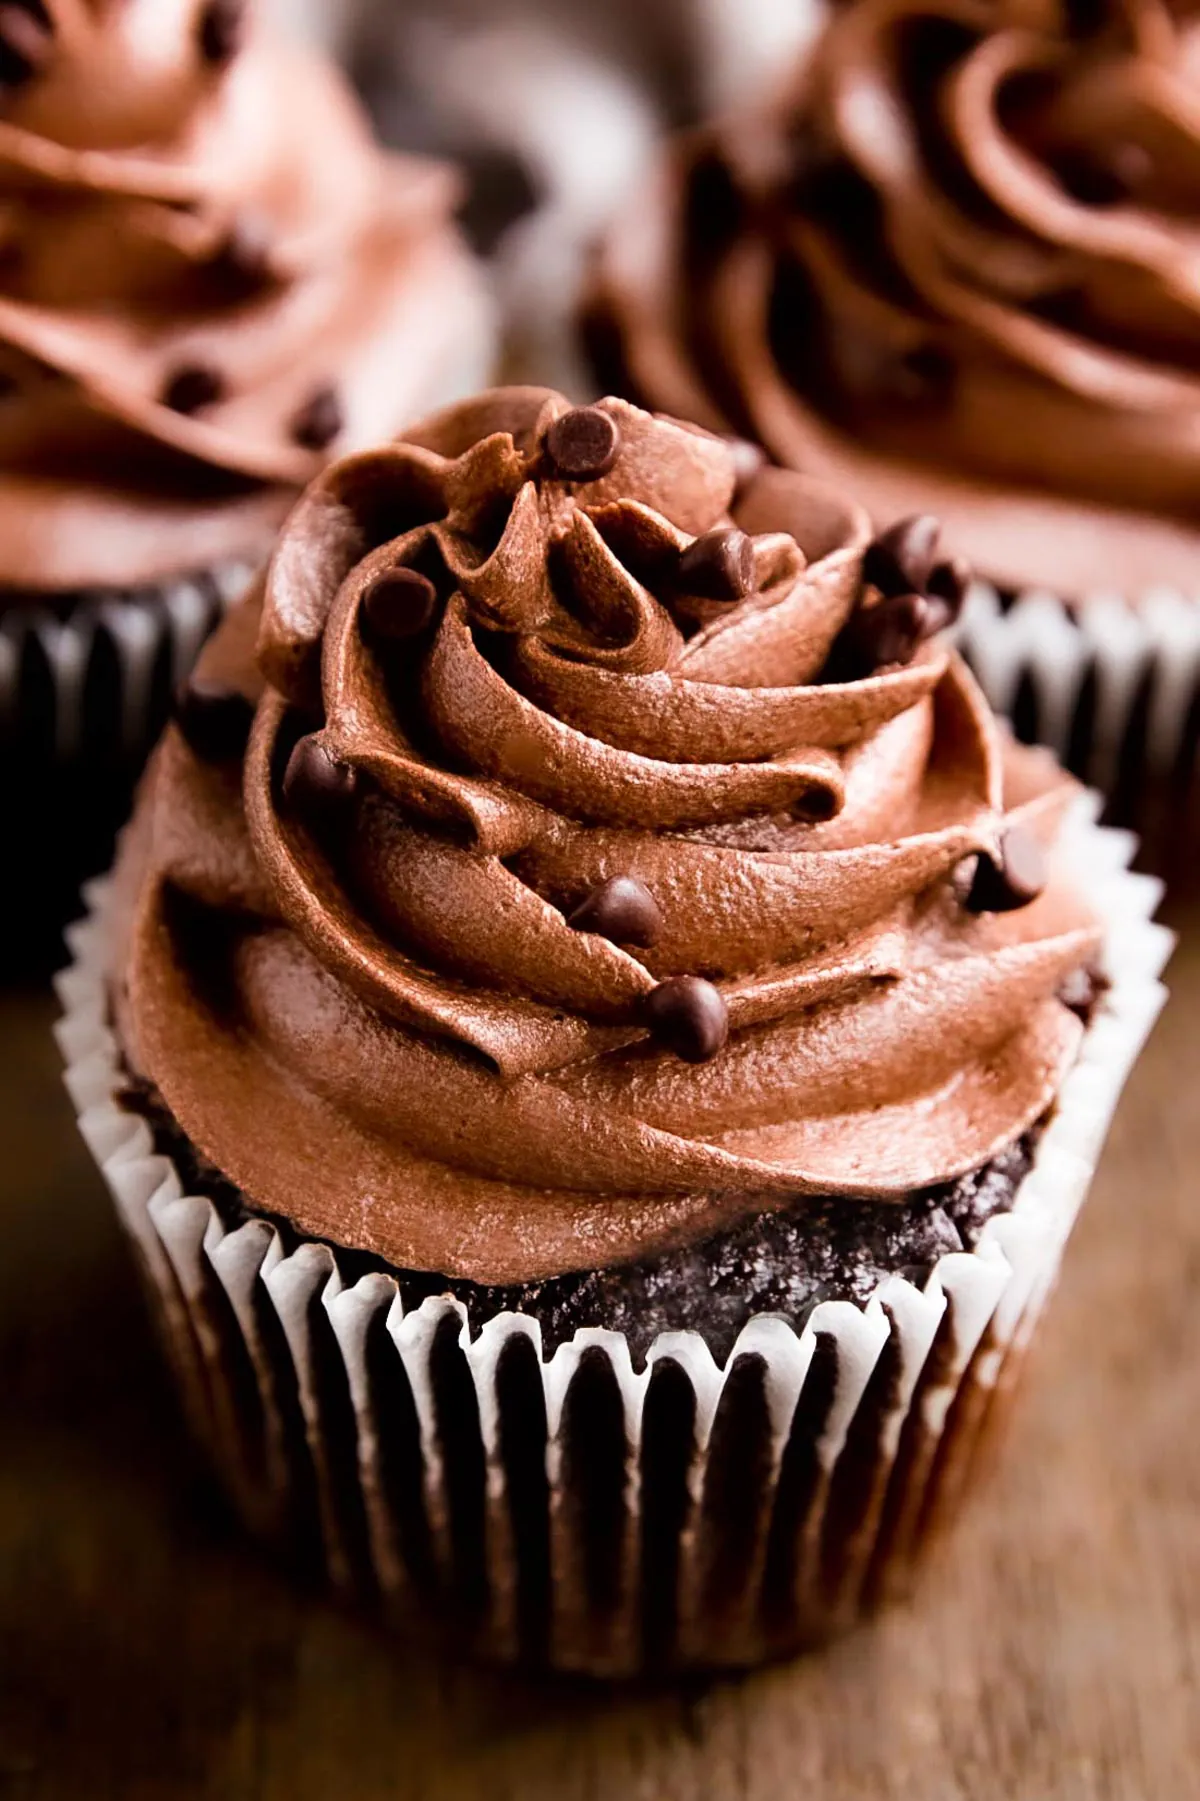 Chocolate cupcake with chocolate buttercream swirl and mini chocolate chips.